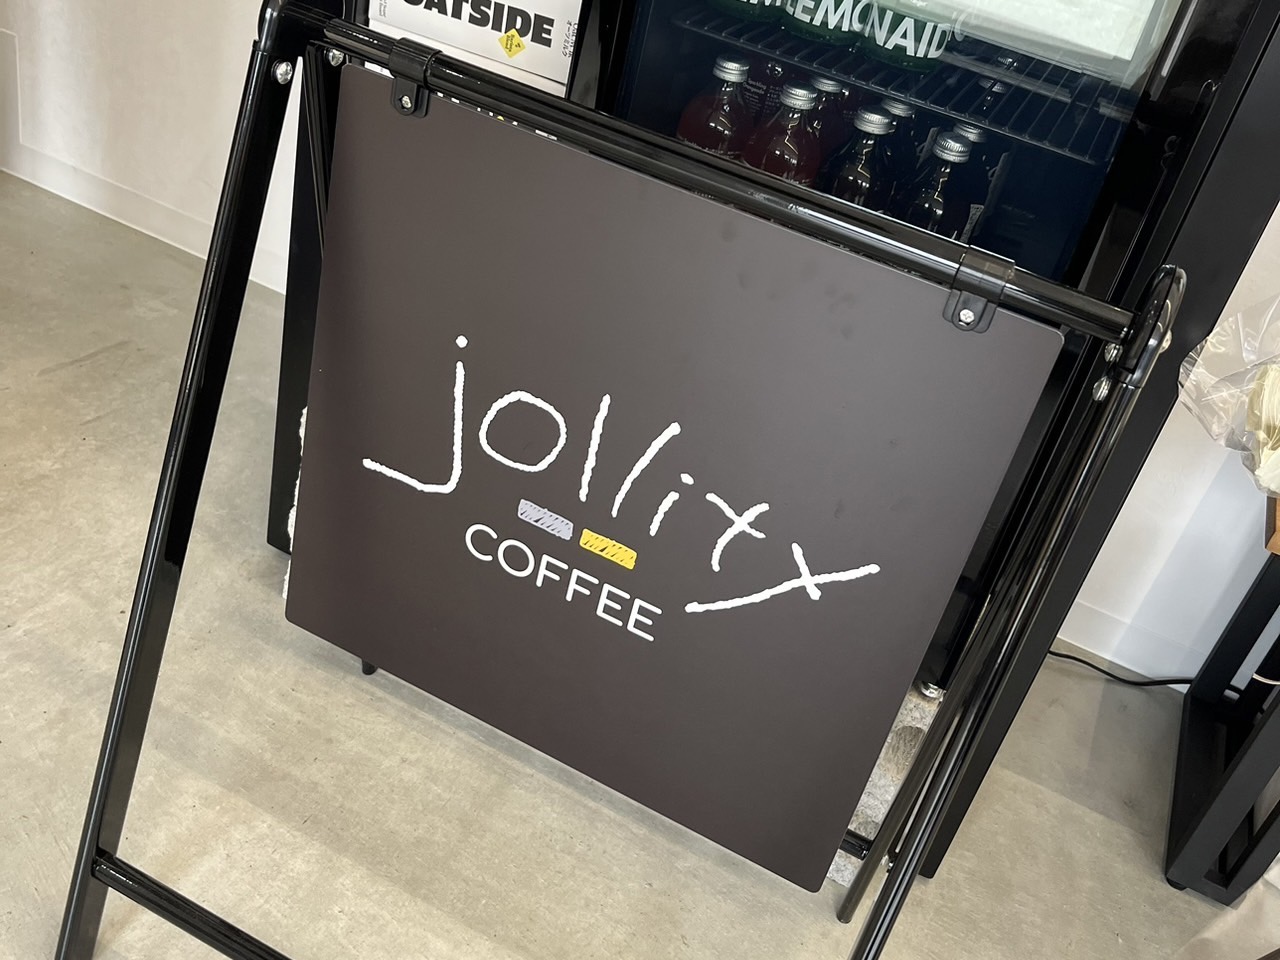 jollity coffee